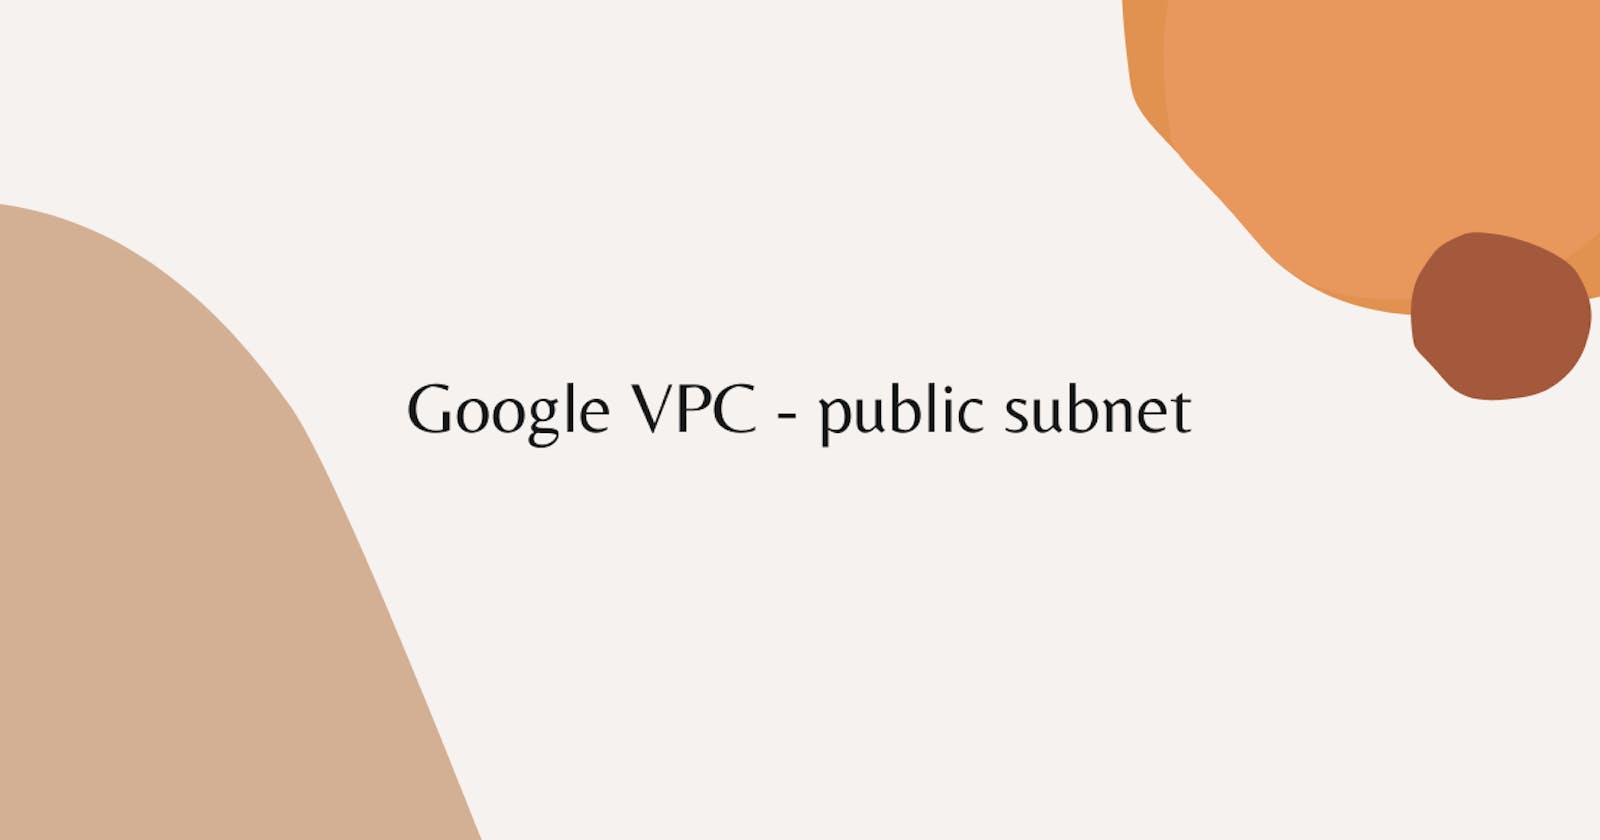 Google VPC - public subnet